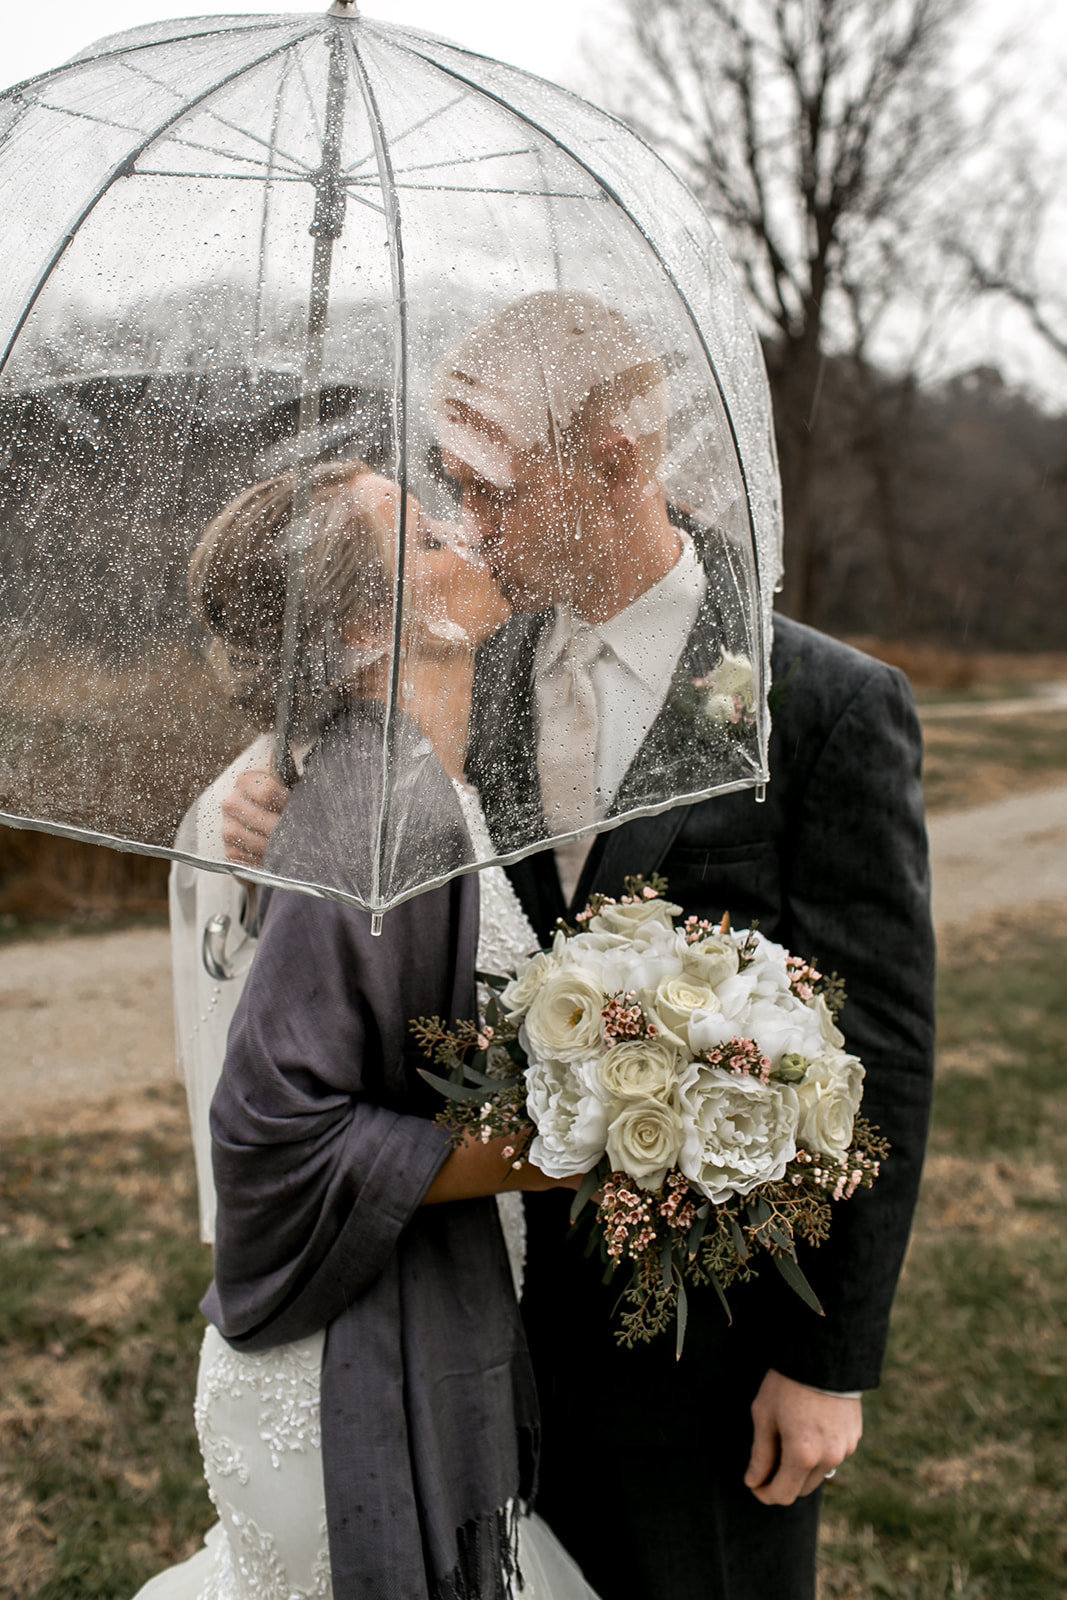 Des Moines Iowa Wedding couple under an umbrella while it's raining.